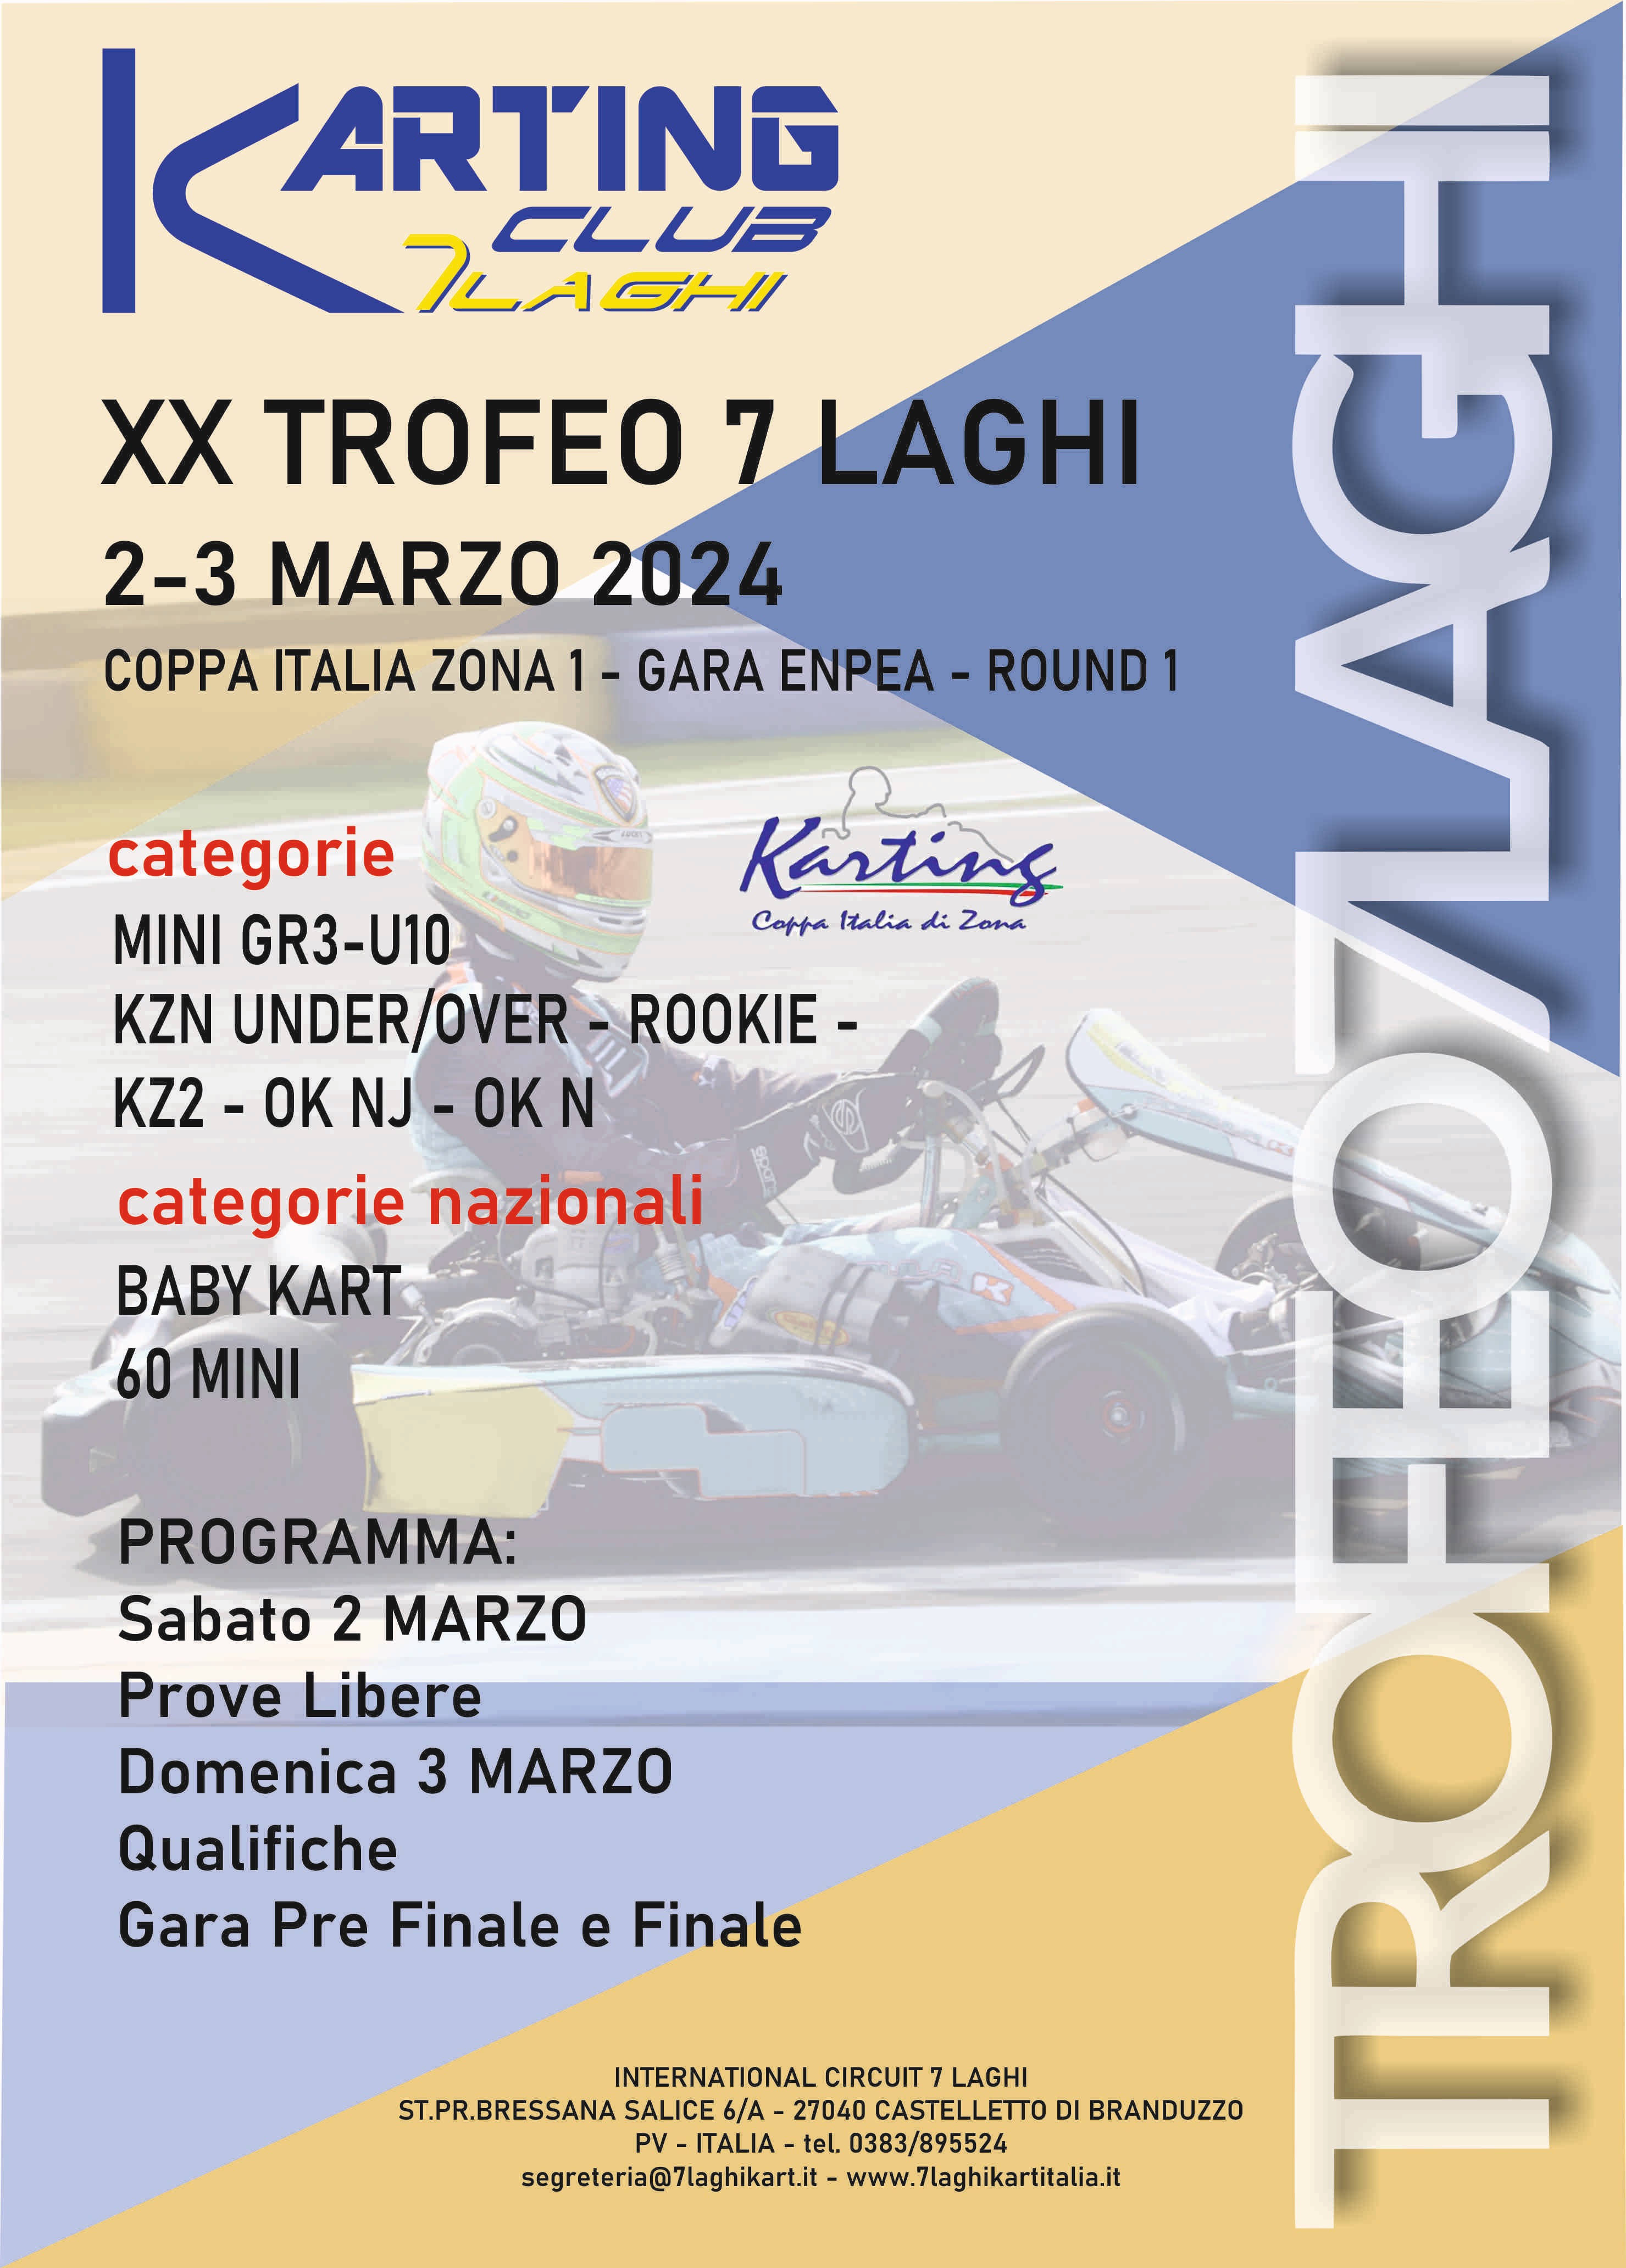 XX TROFEO 7 LAGHI - COPPA ITALIA ZONA 1 - R.1